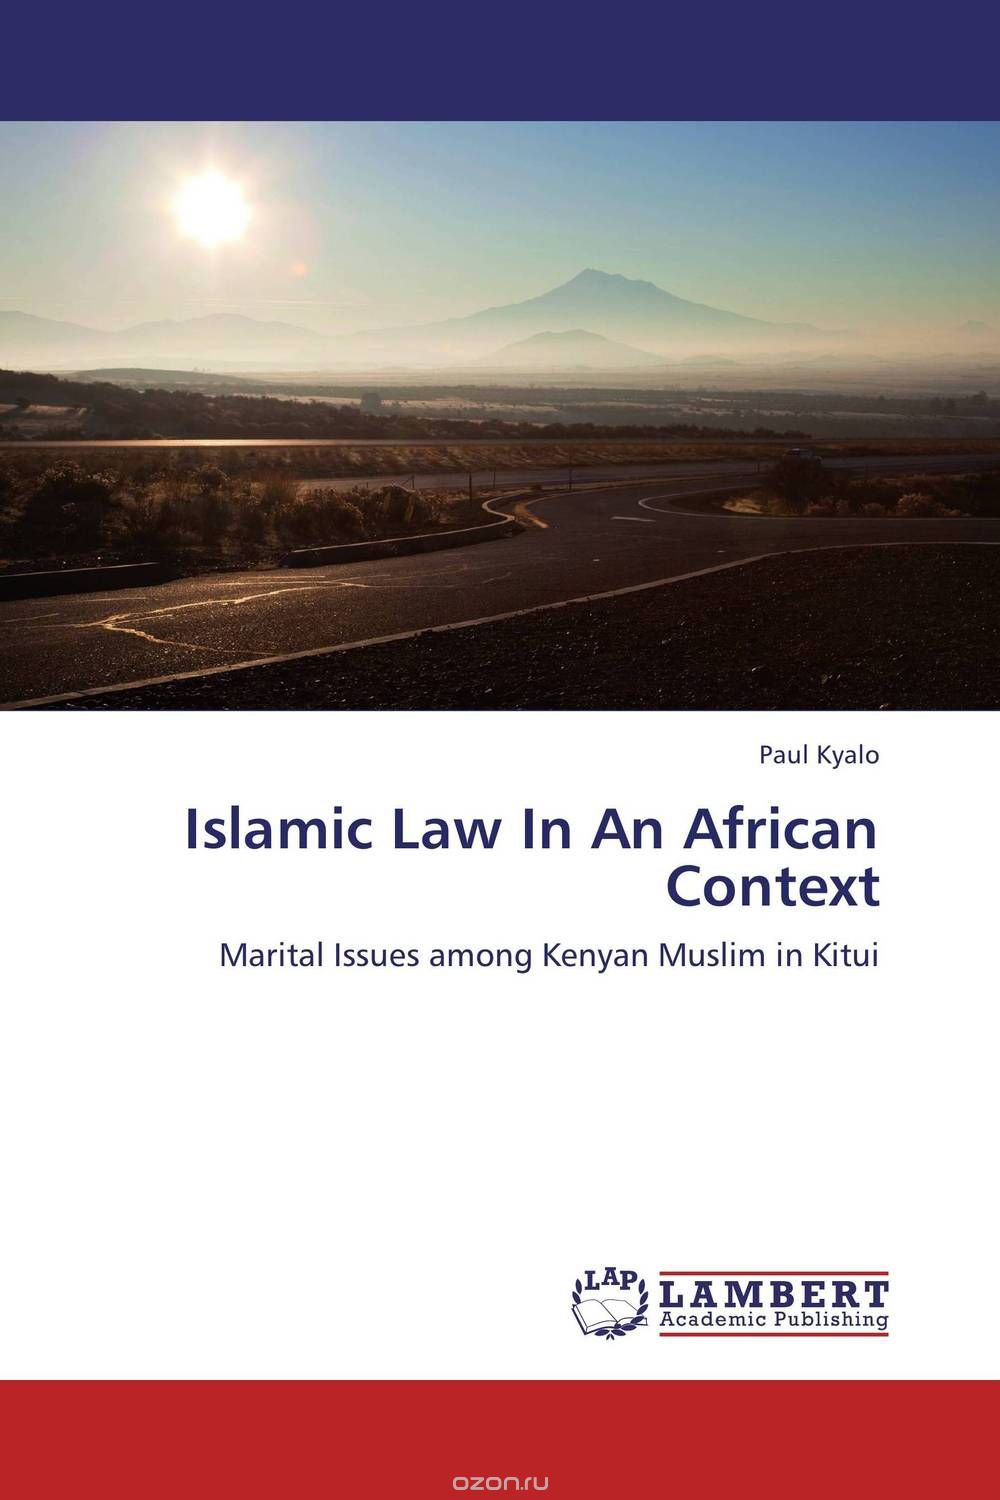 Скачать книгу "Islamic Law In An African Context"